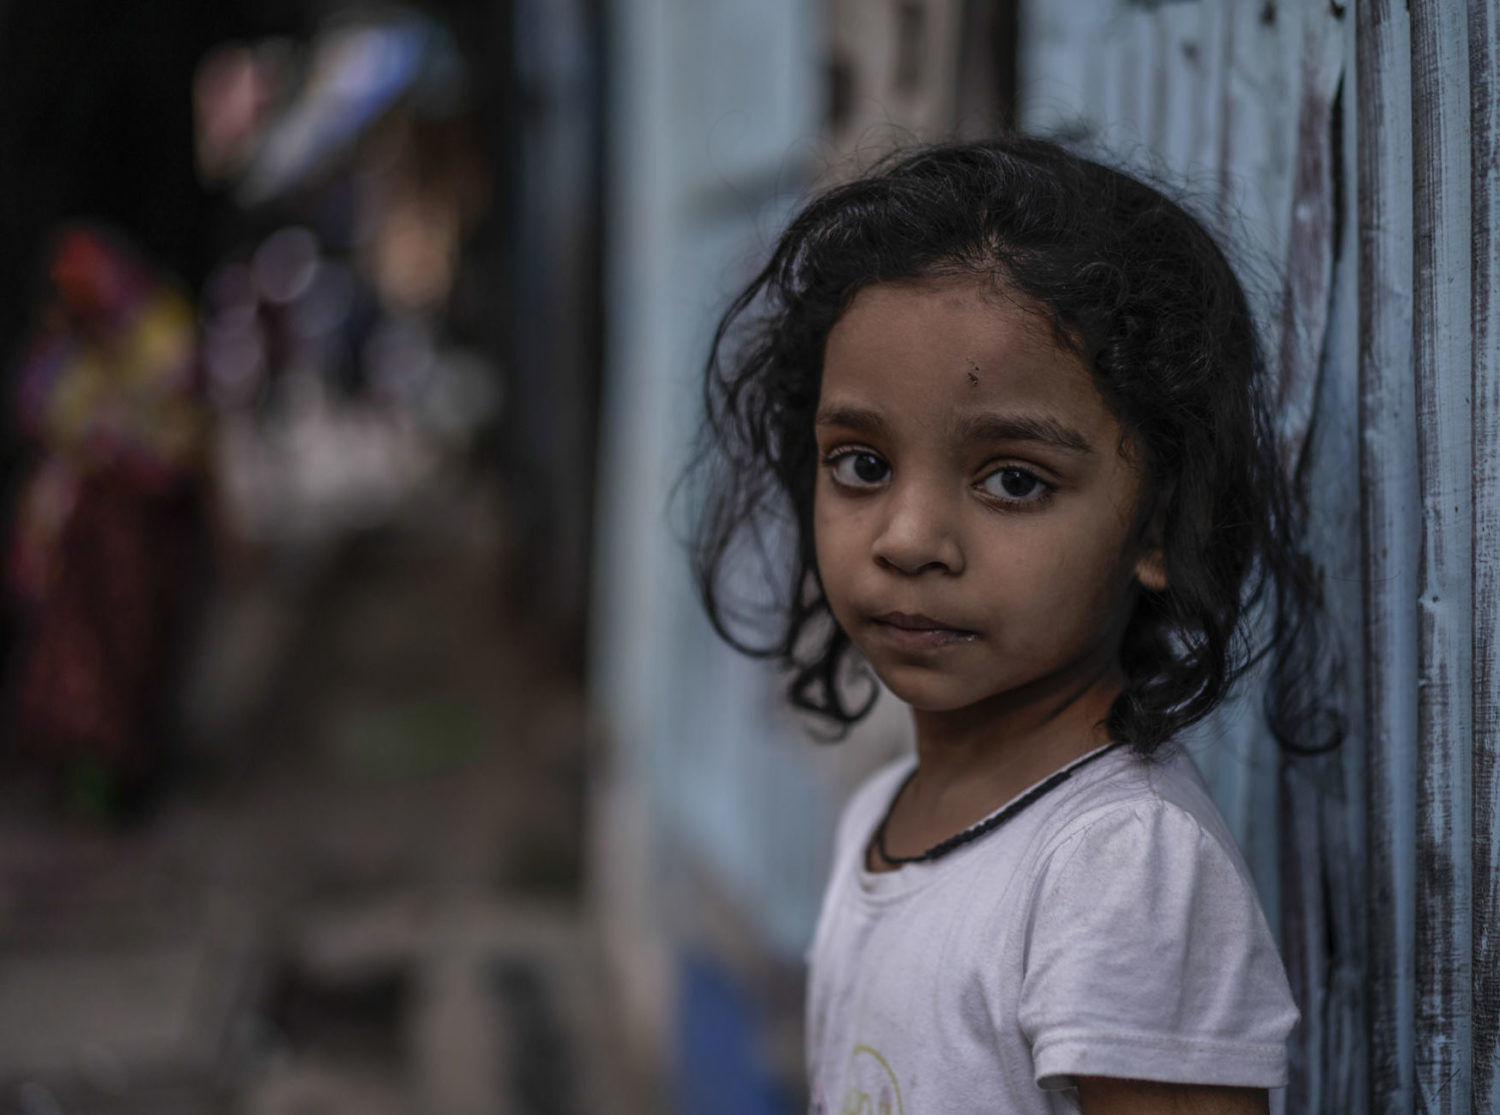 Girl in Mumbai, India during COVID-19 pandemic